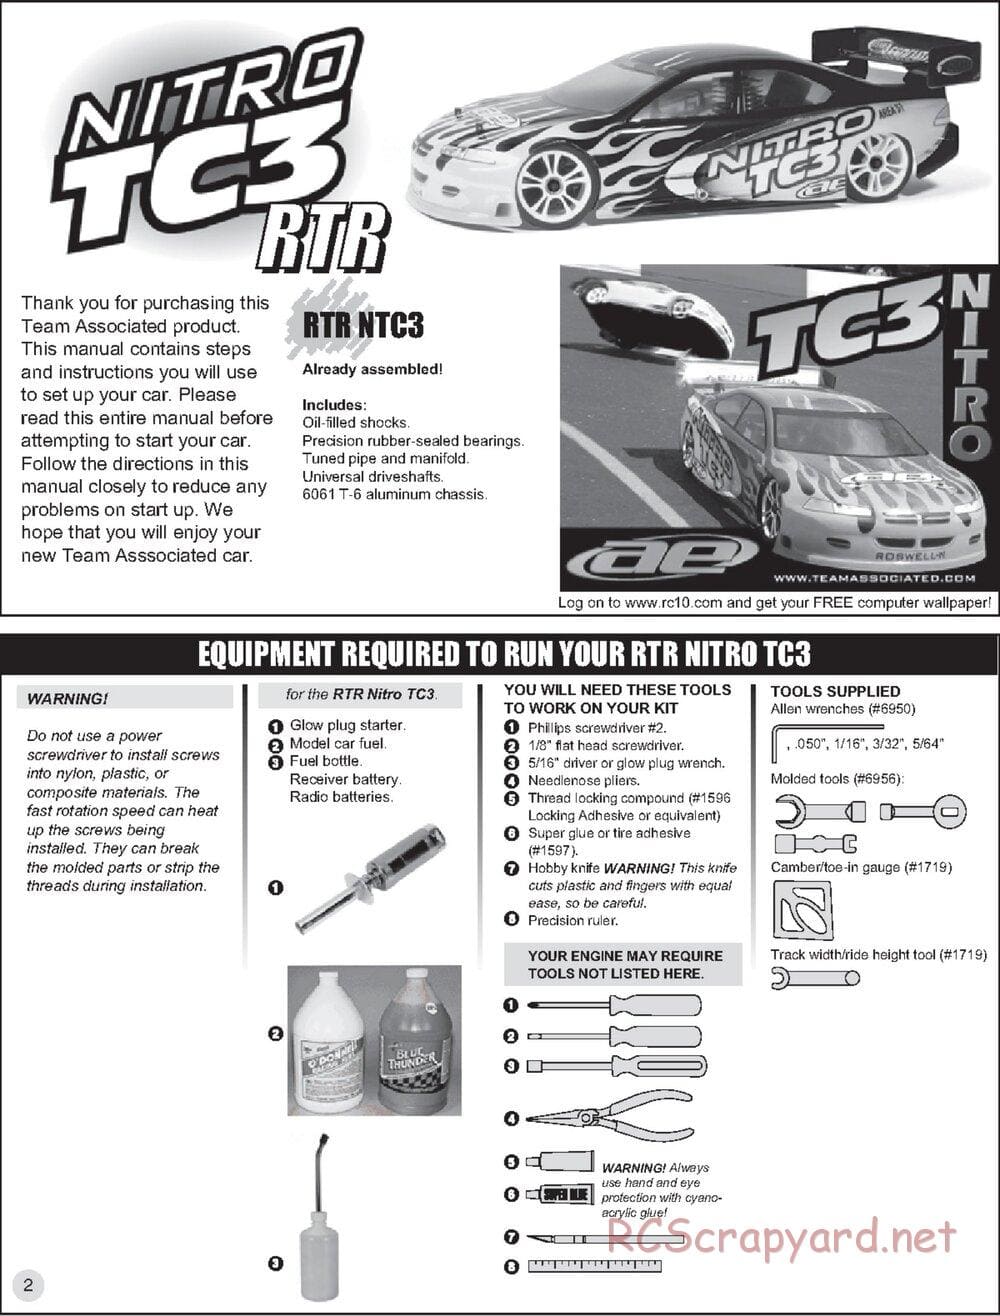 Team Associated - NTC3 RTR - Manual - Page 1